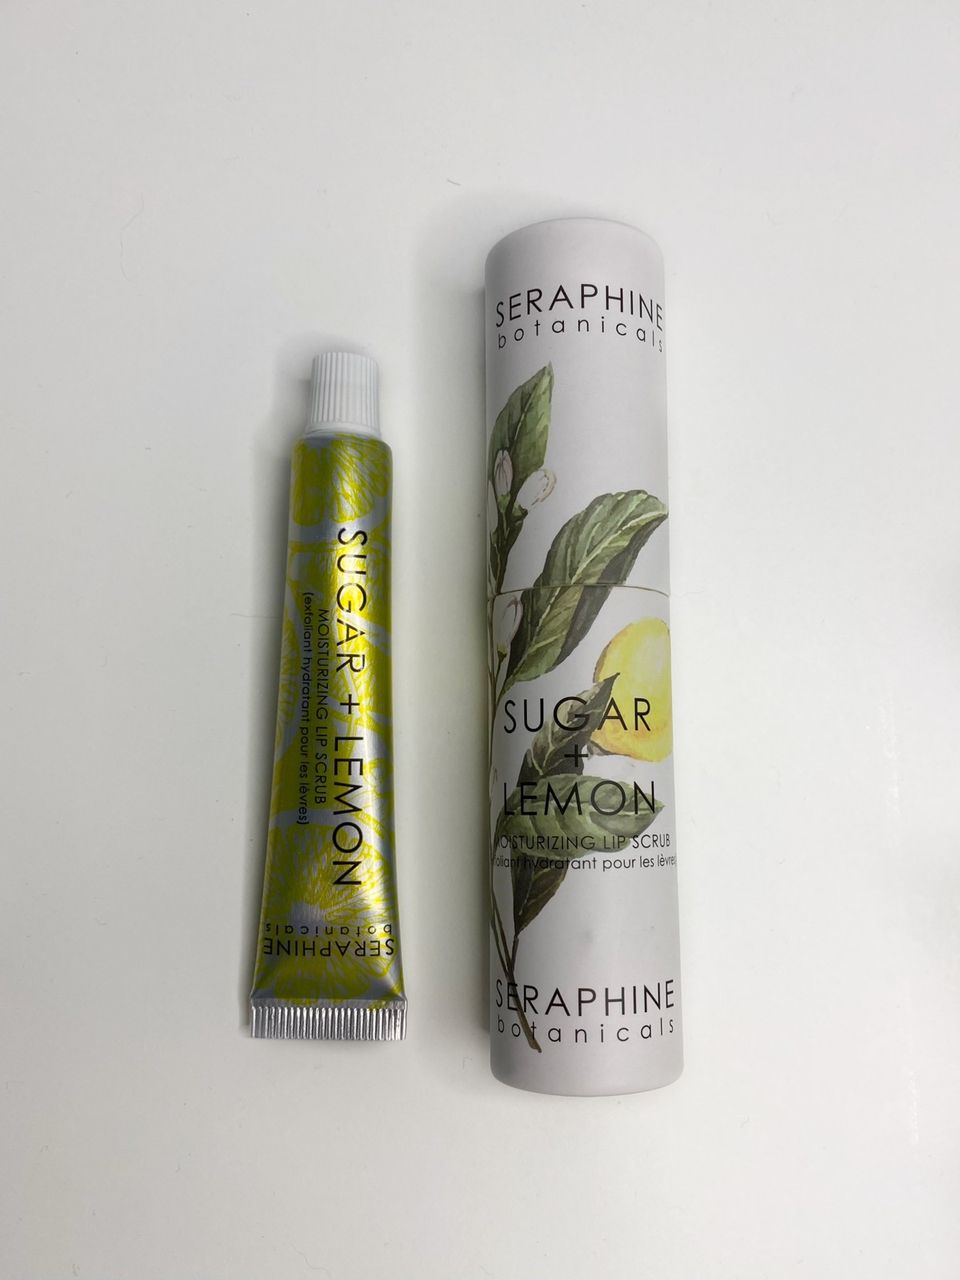 Seraphine botanicals sugar + lemon moisturizing lip scrub